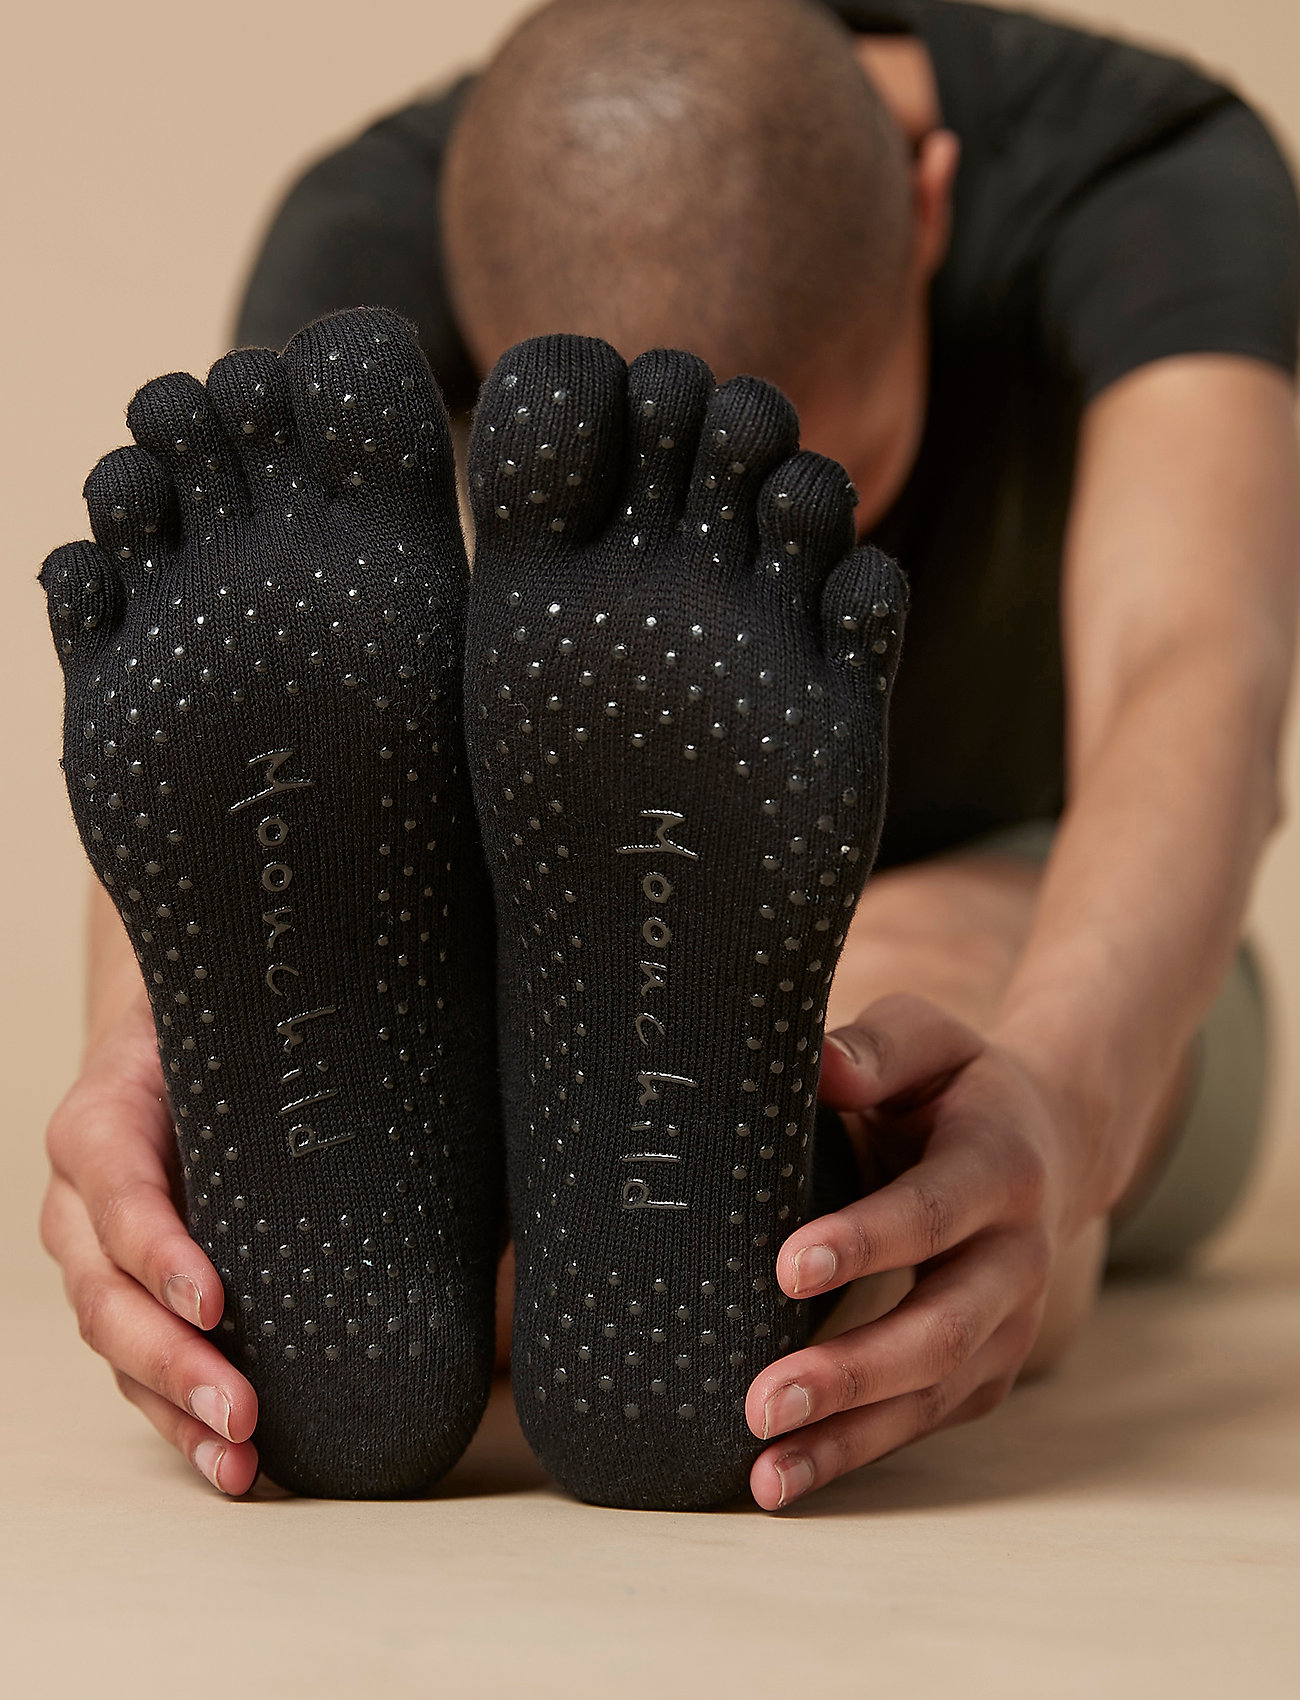 Moonchild Toe Grip Socks - Low Rise - Onyx Black - YogaHabits